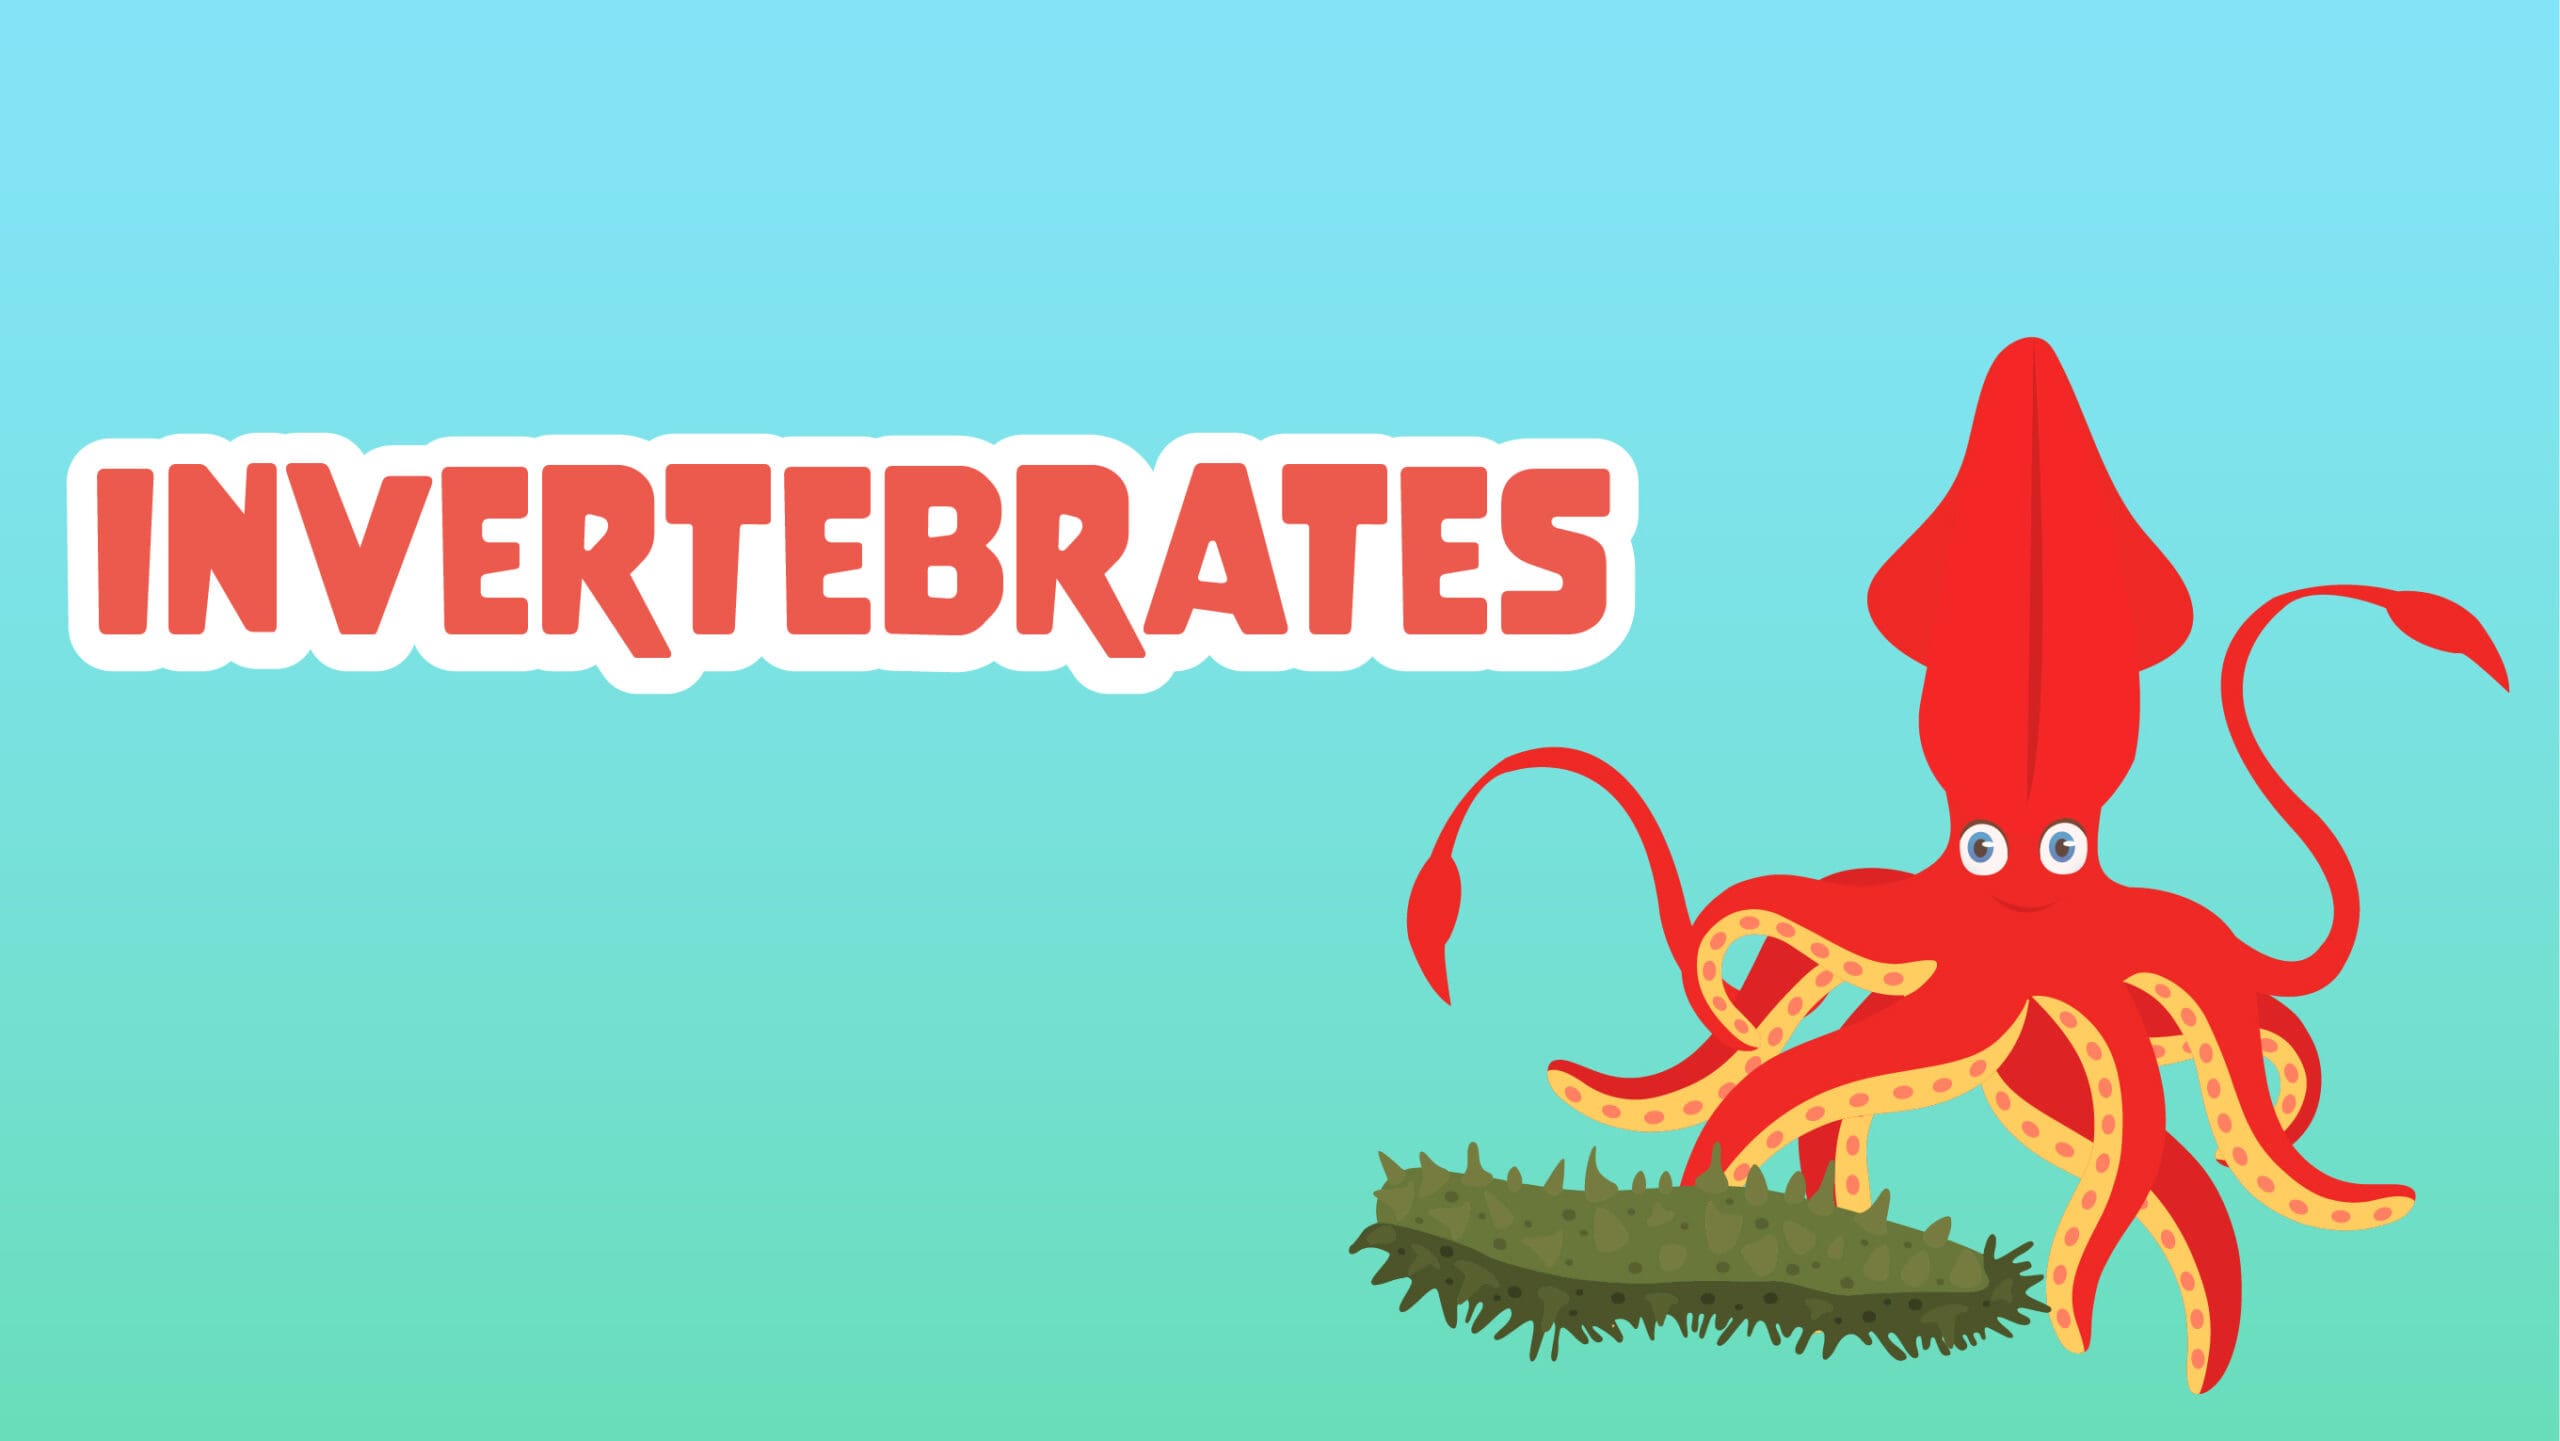 Invertebrates Facts for Kids – 5 Interesting Facts about Invertebrates